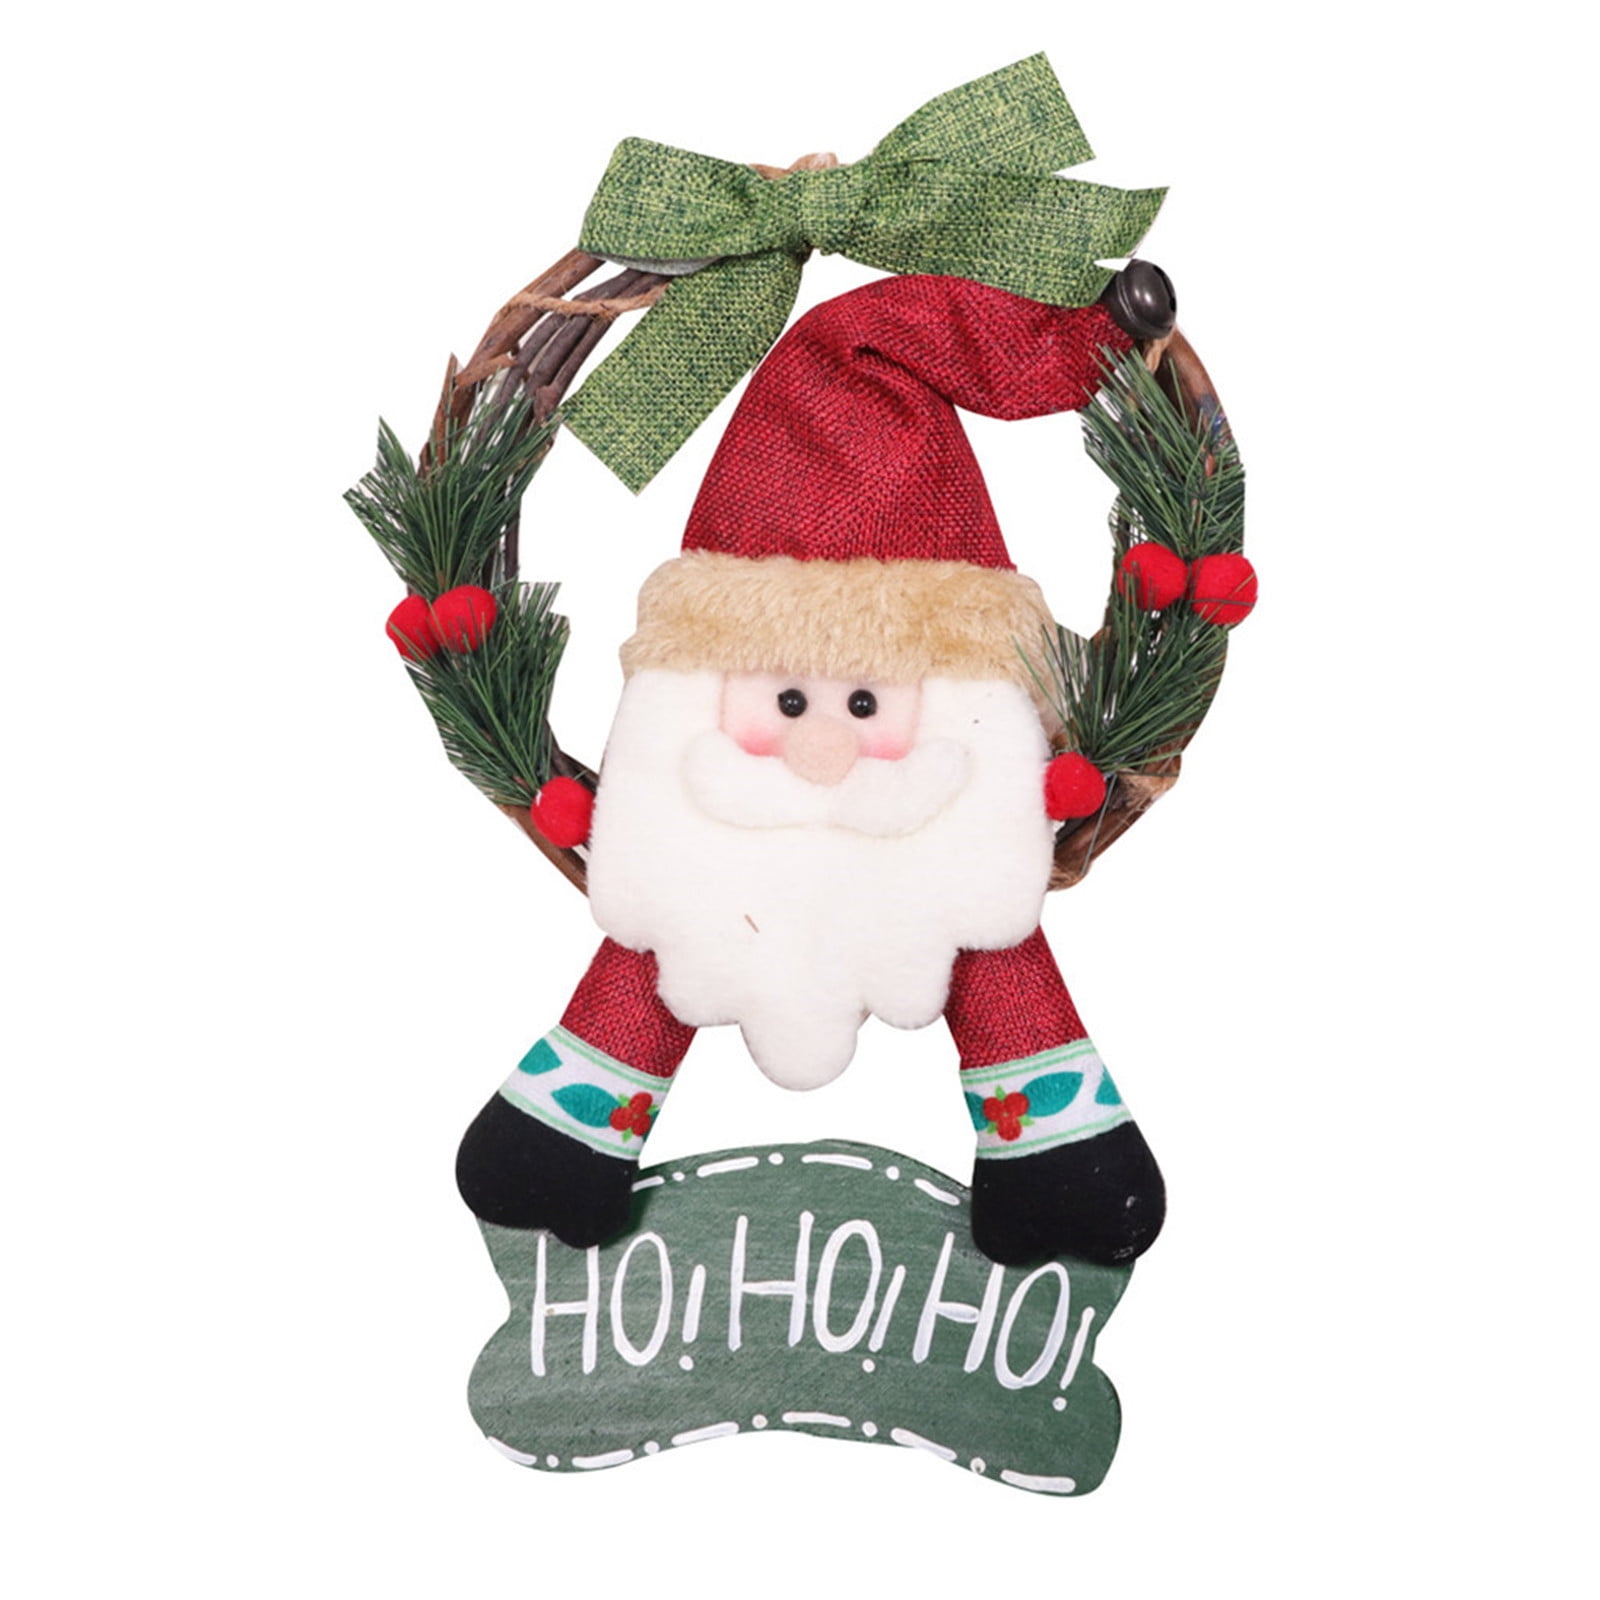 Christmas Sentiment May Santa bring you Wealth… card topper banner pk10 